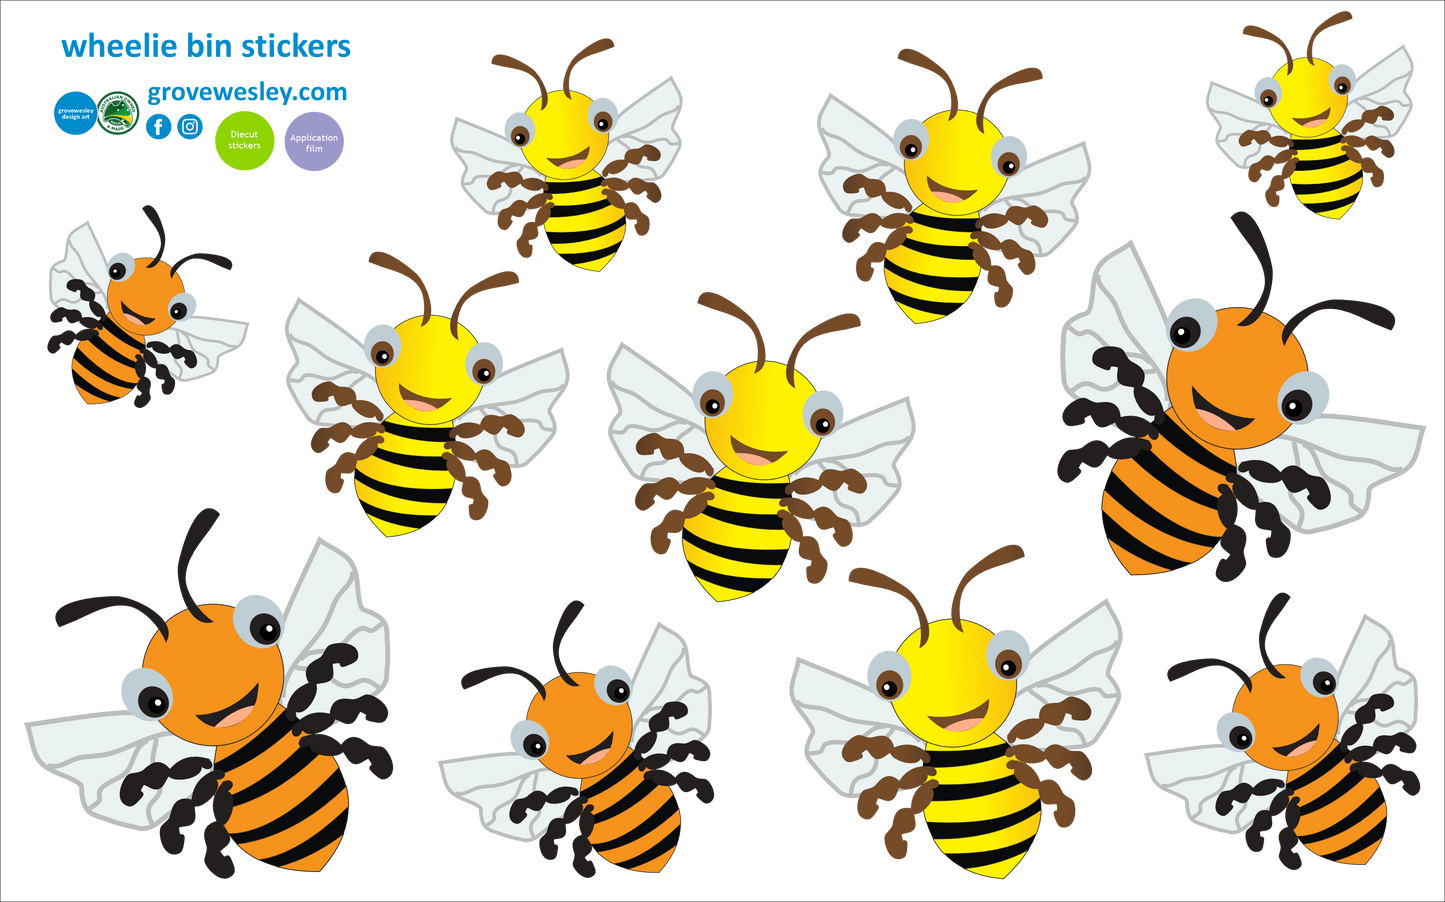  Bees stickers for wheelie bins